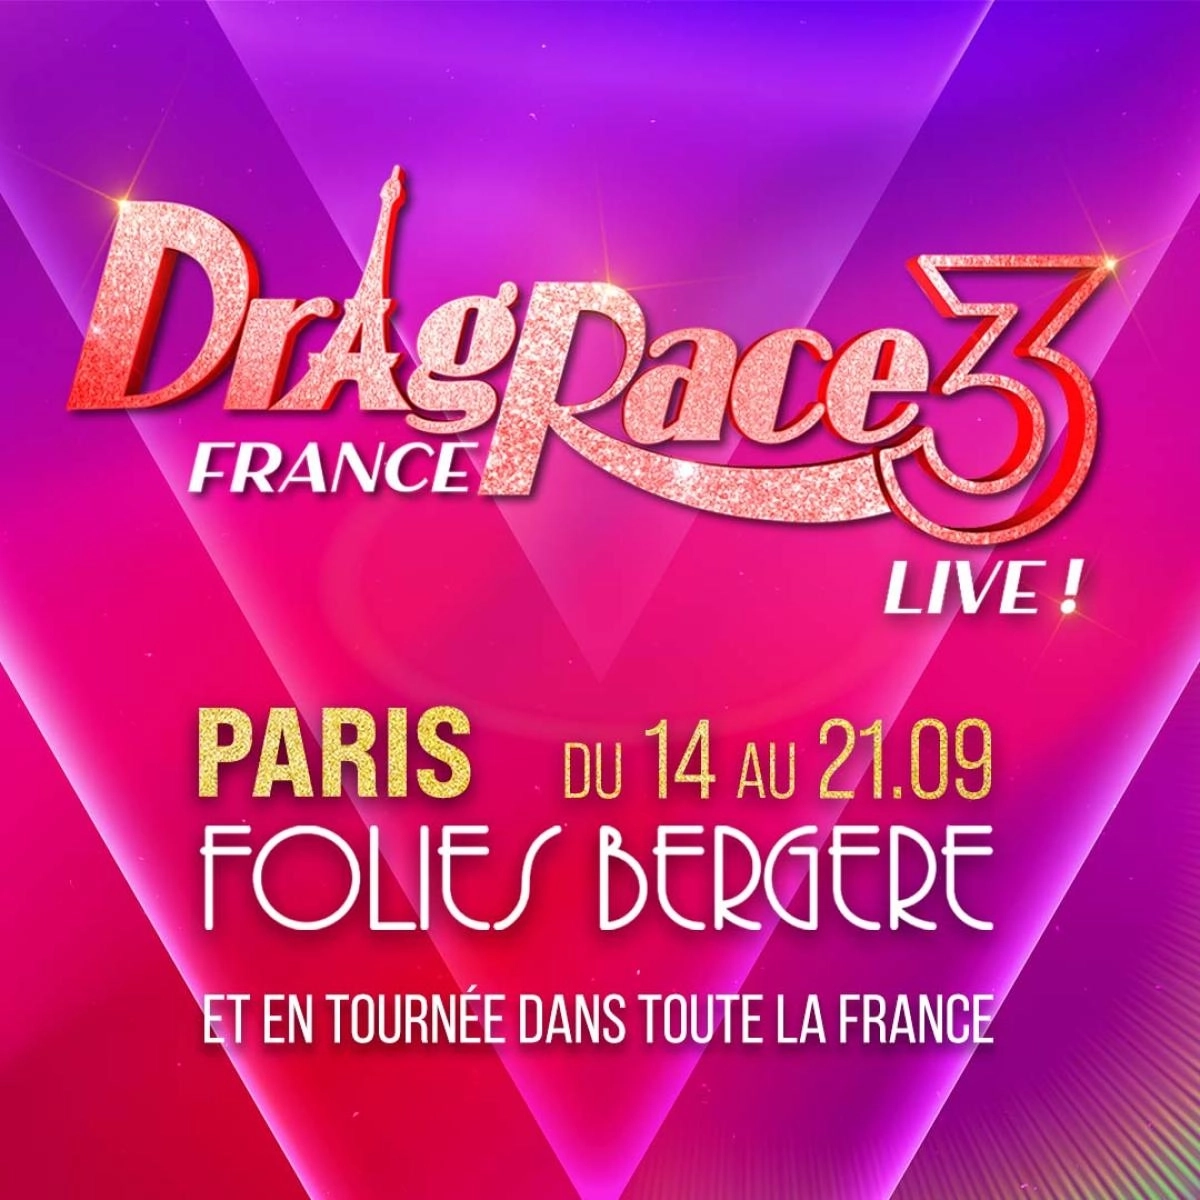 Drag Race France Live Saison 3 in der Folies Bergere Tickets